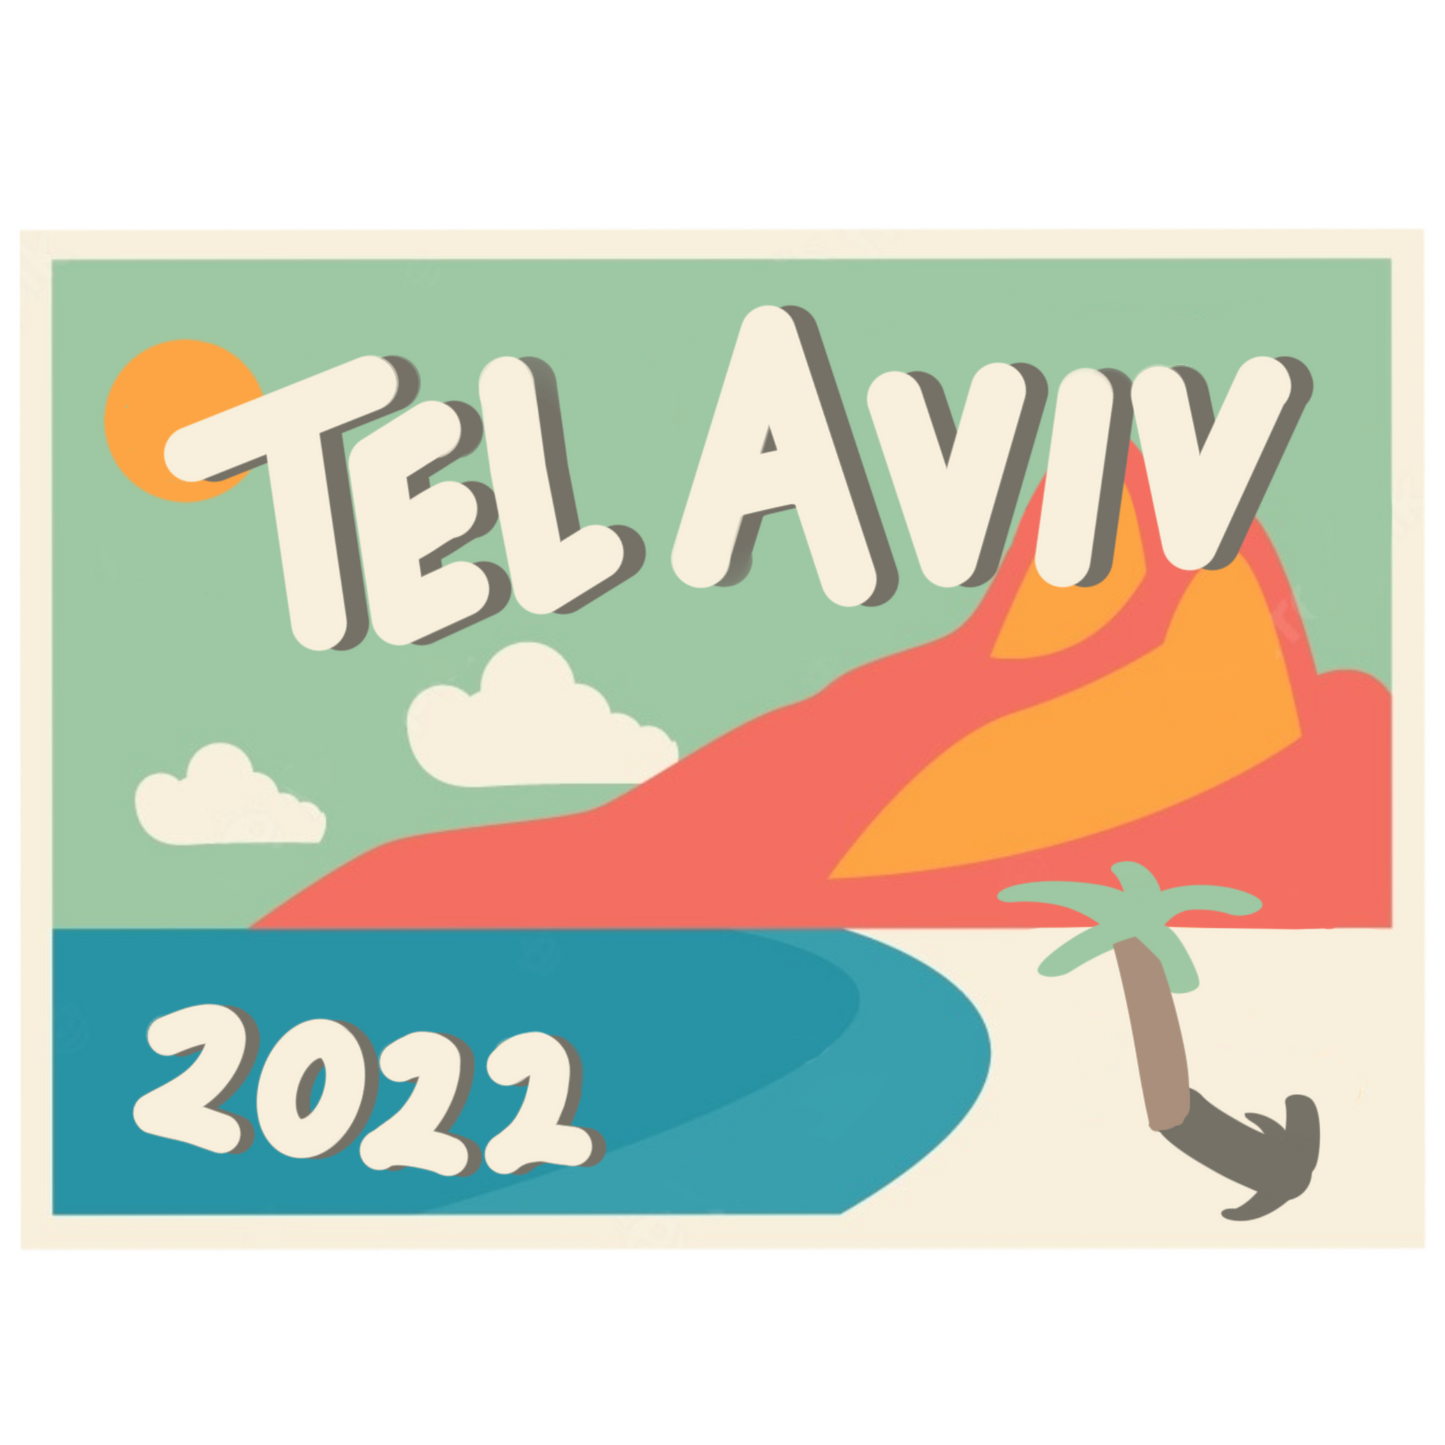 Alex's Tel Aviv Sticker Set